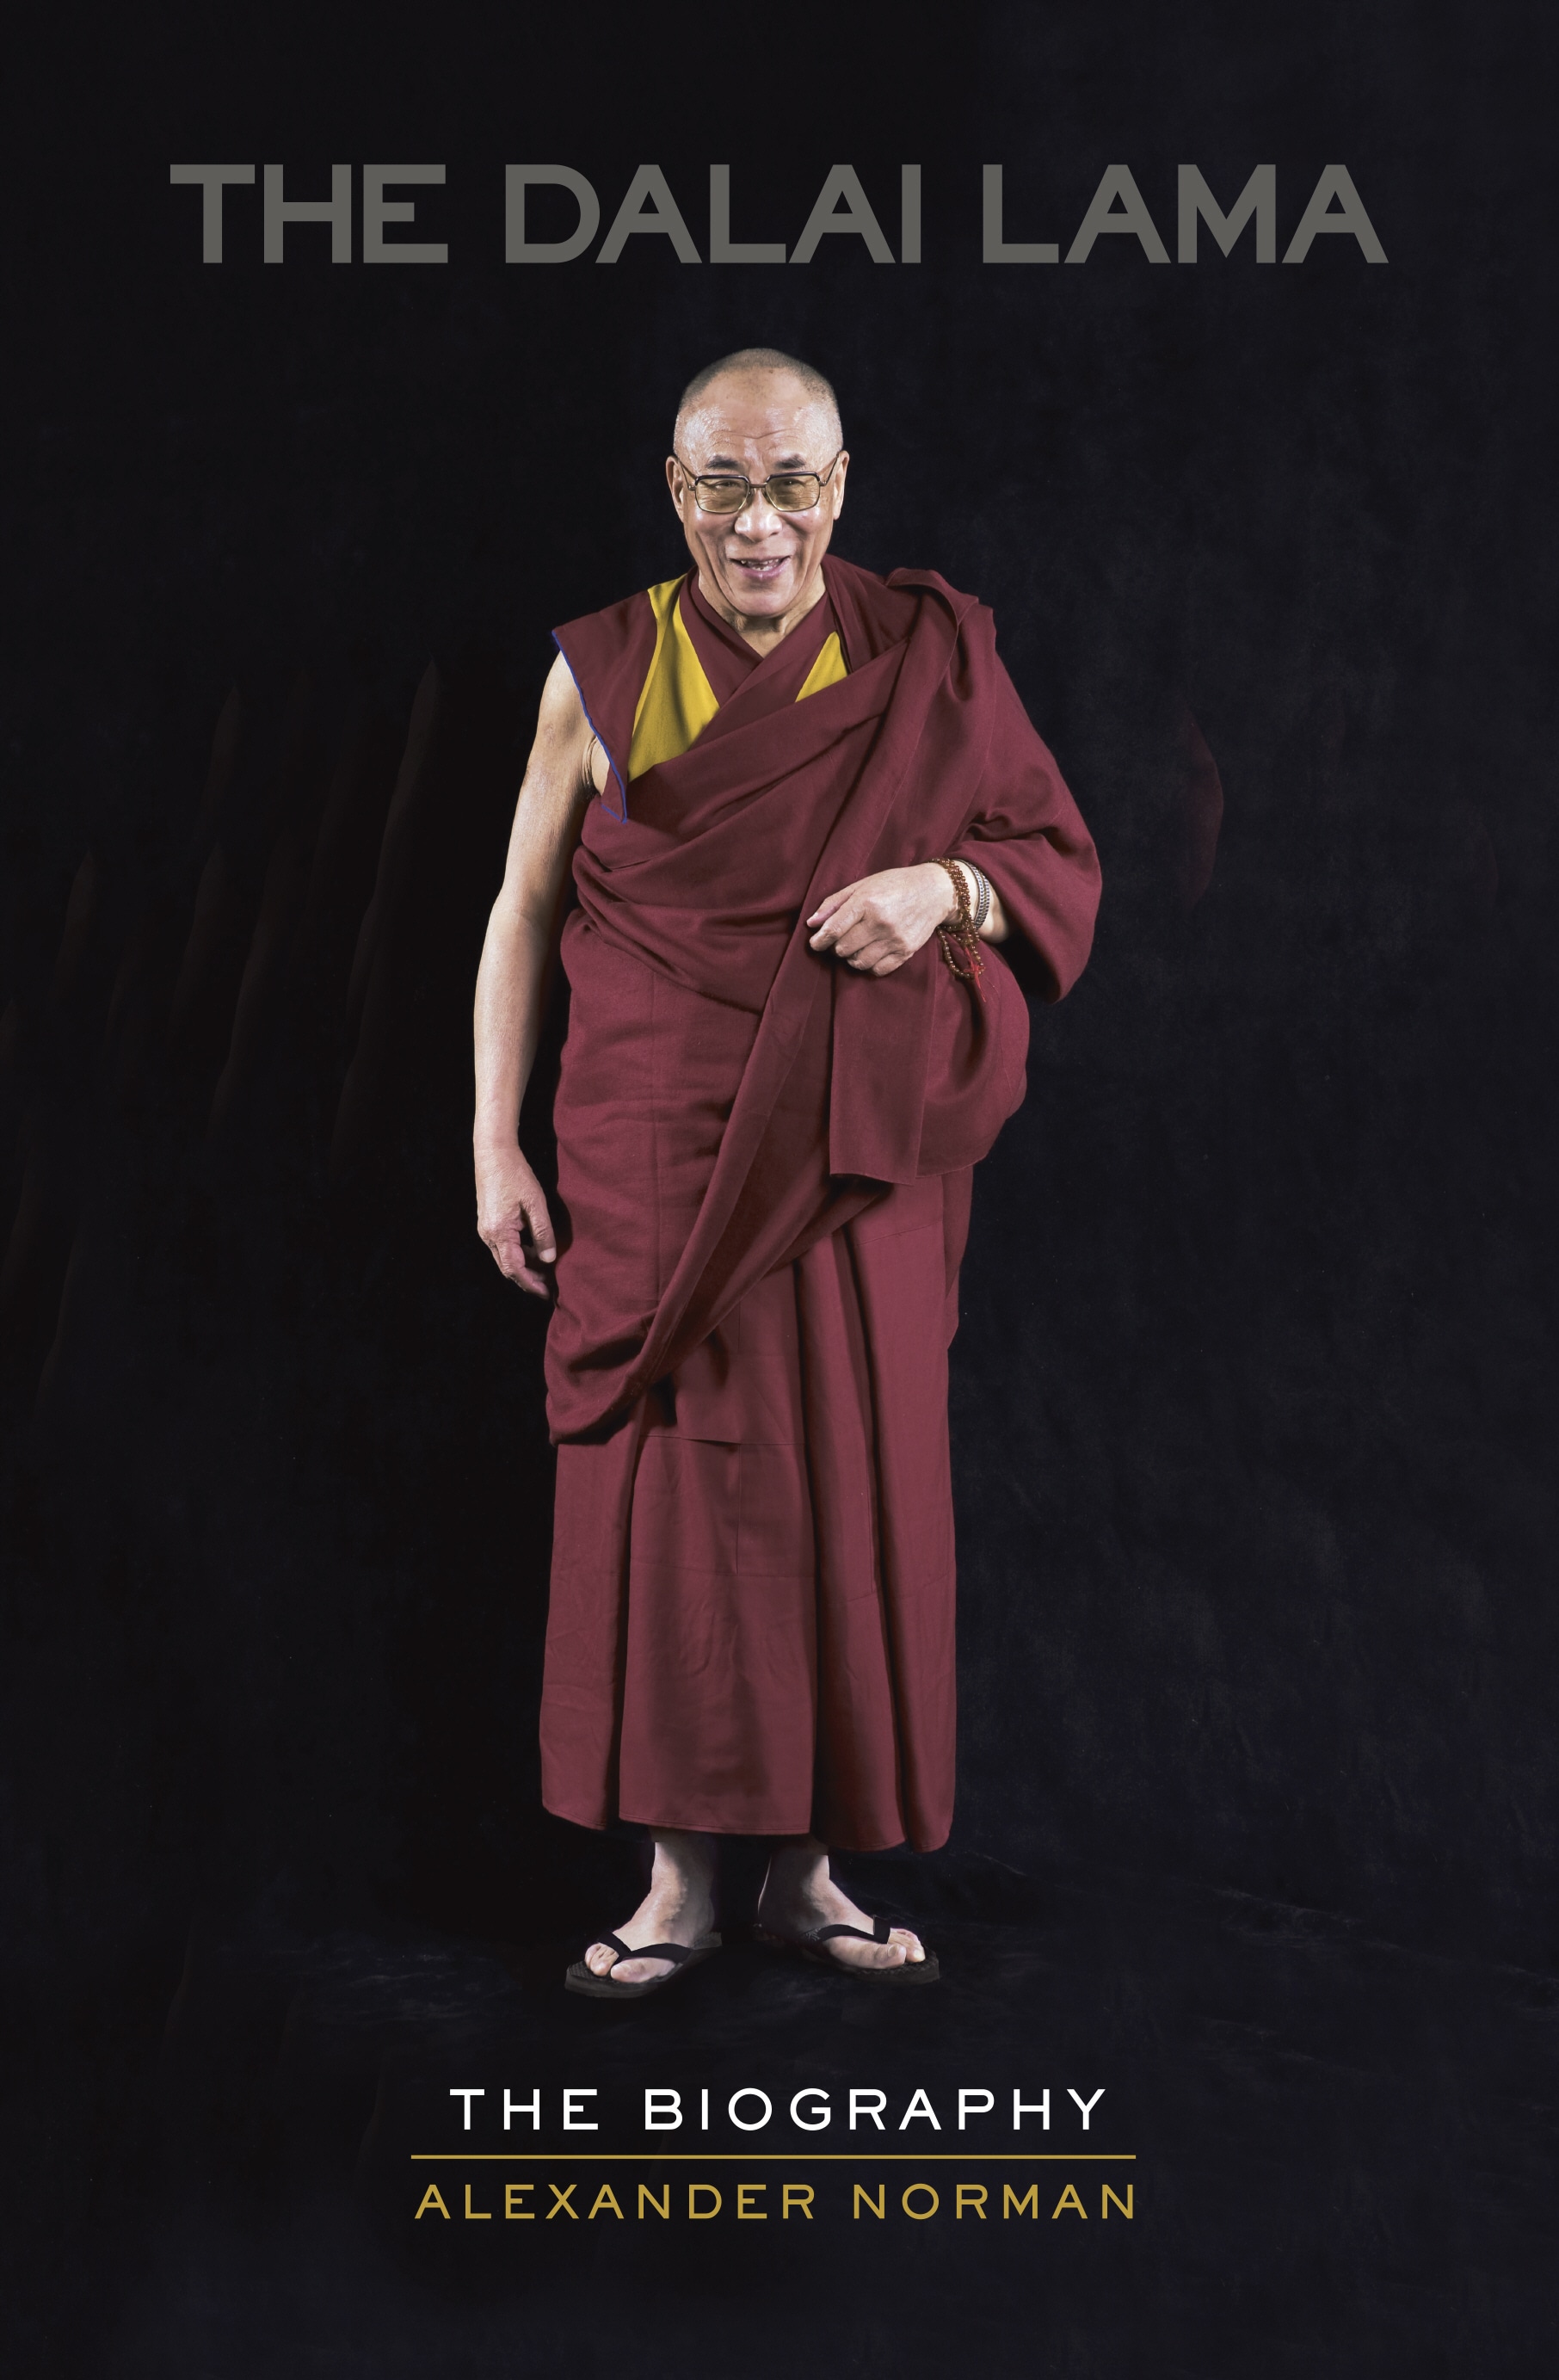 Book “The Dalai Lama” by Alexander Norman — February 27, 2020